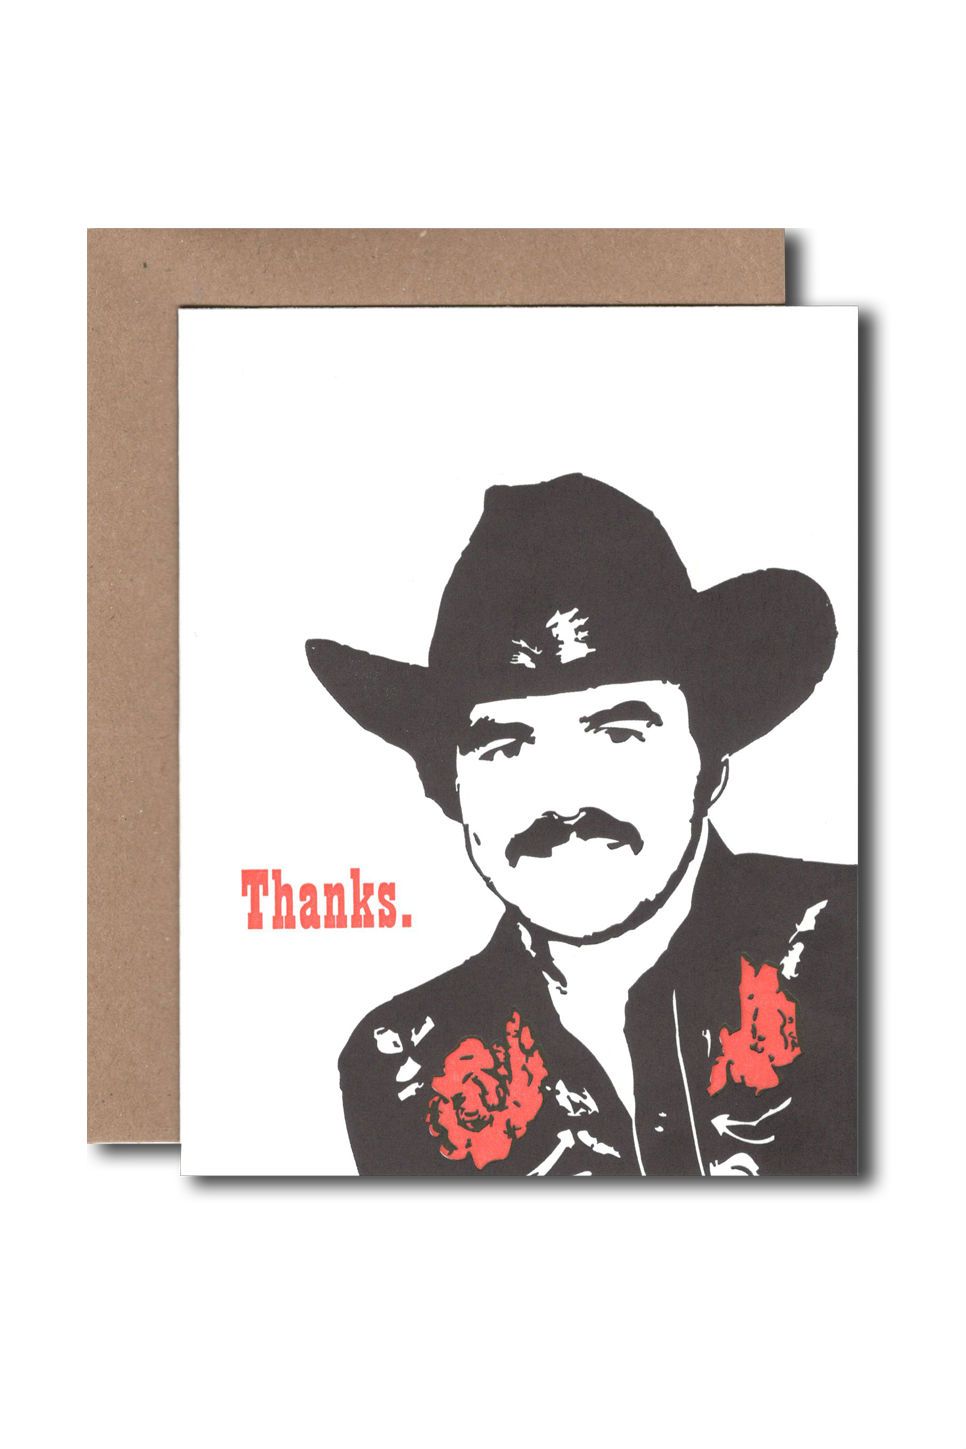 Burt Thanks Greeting Card